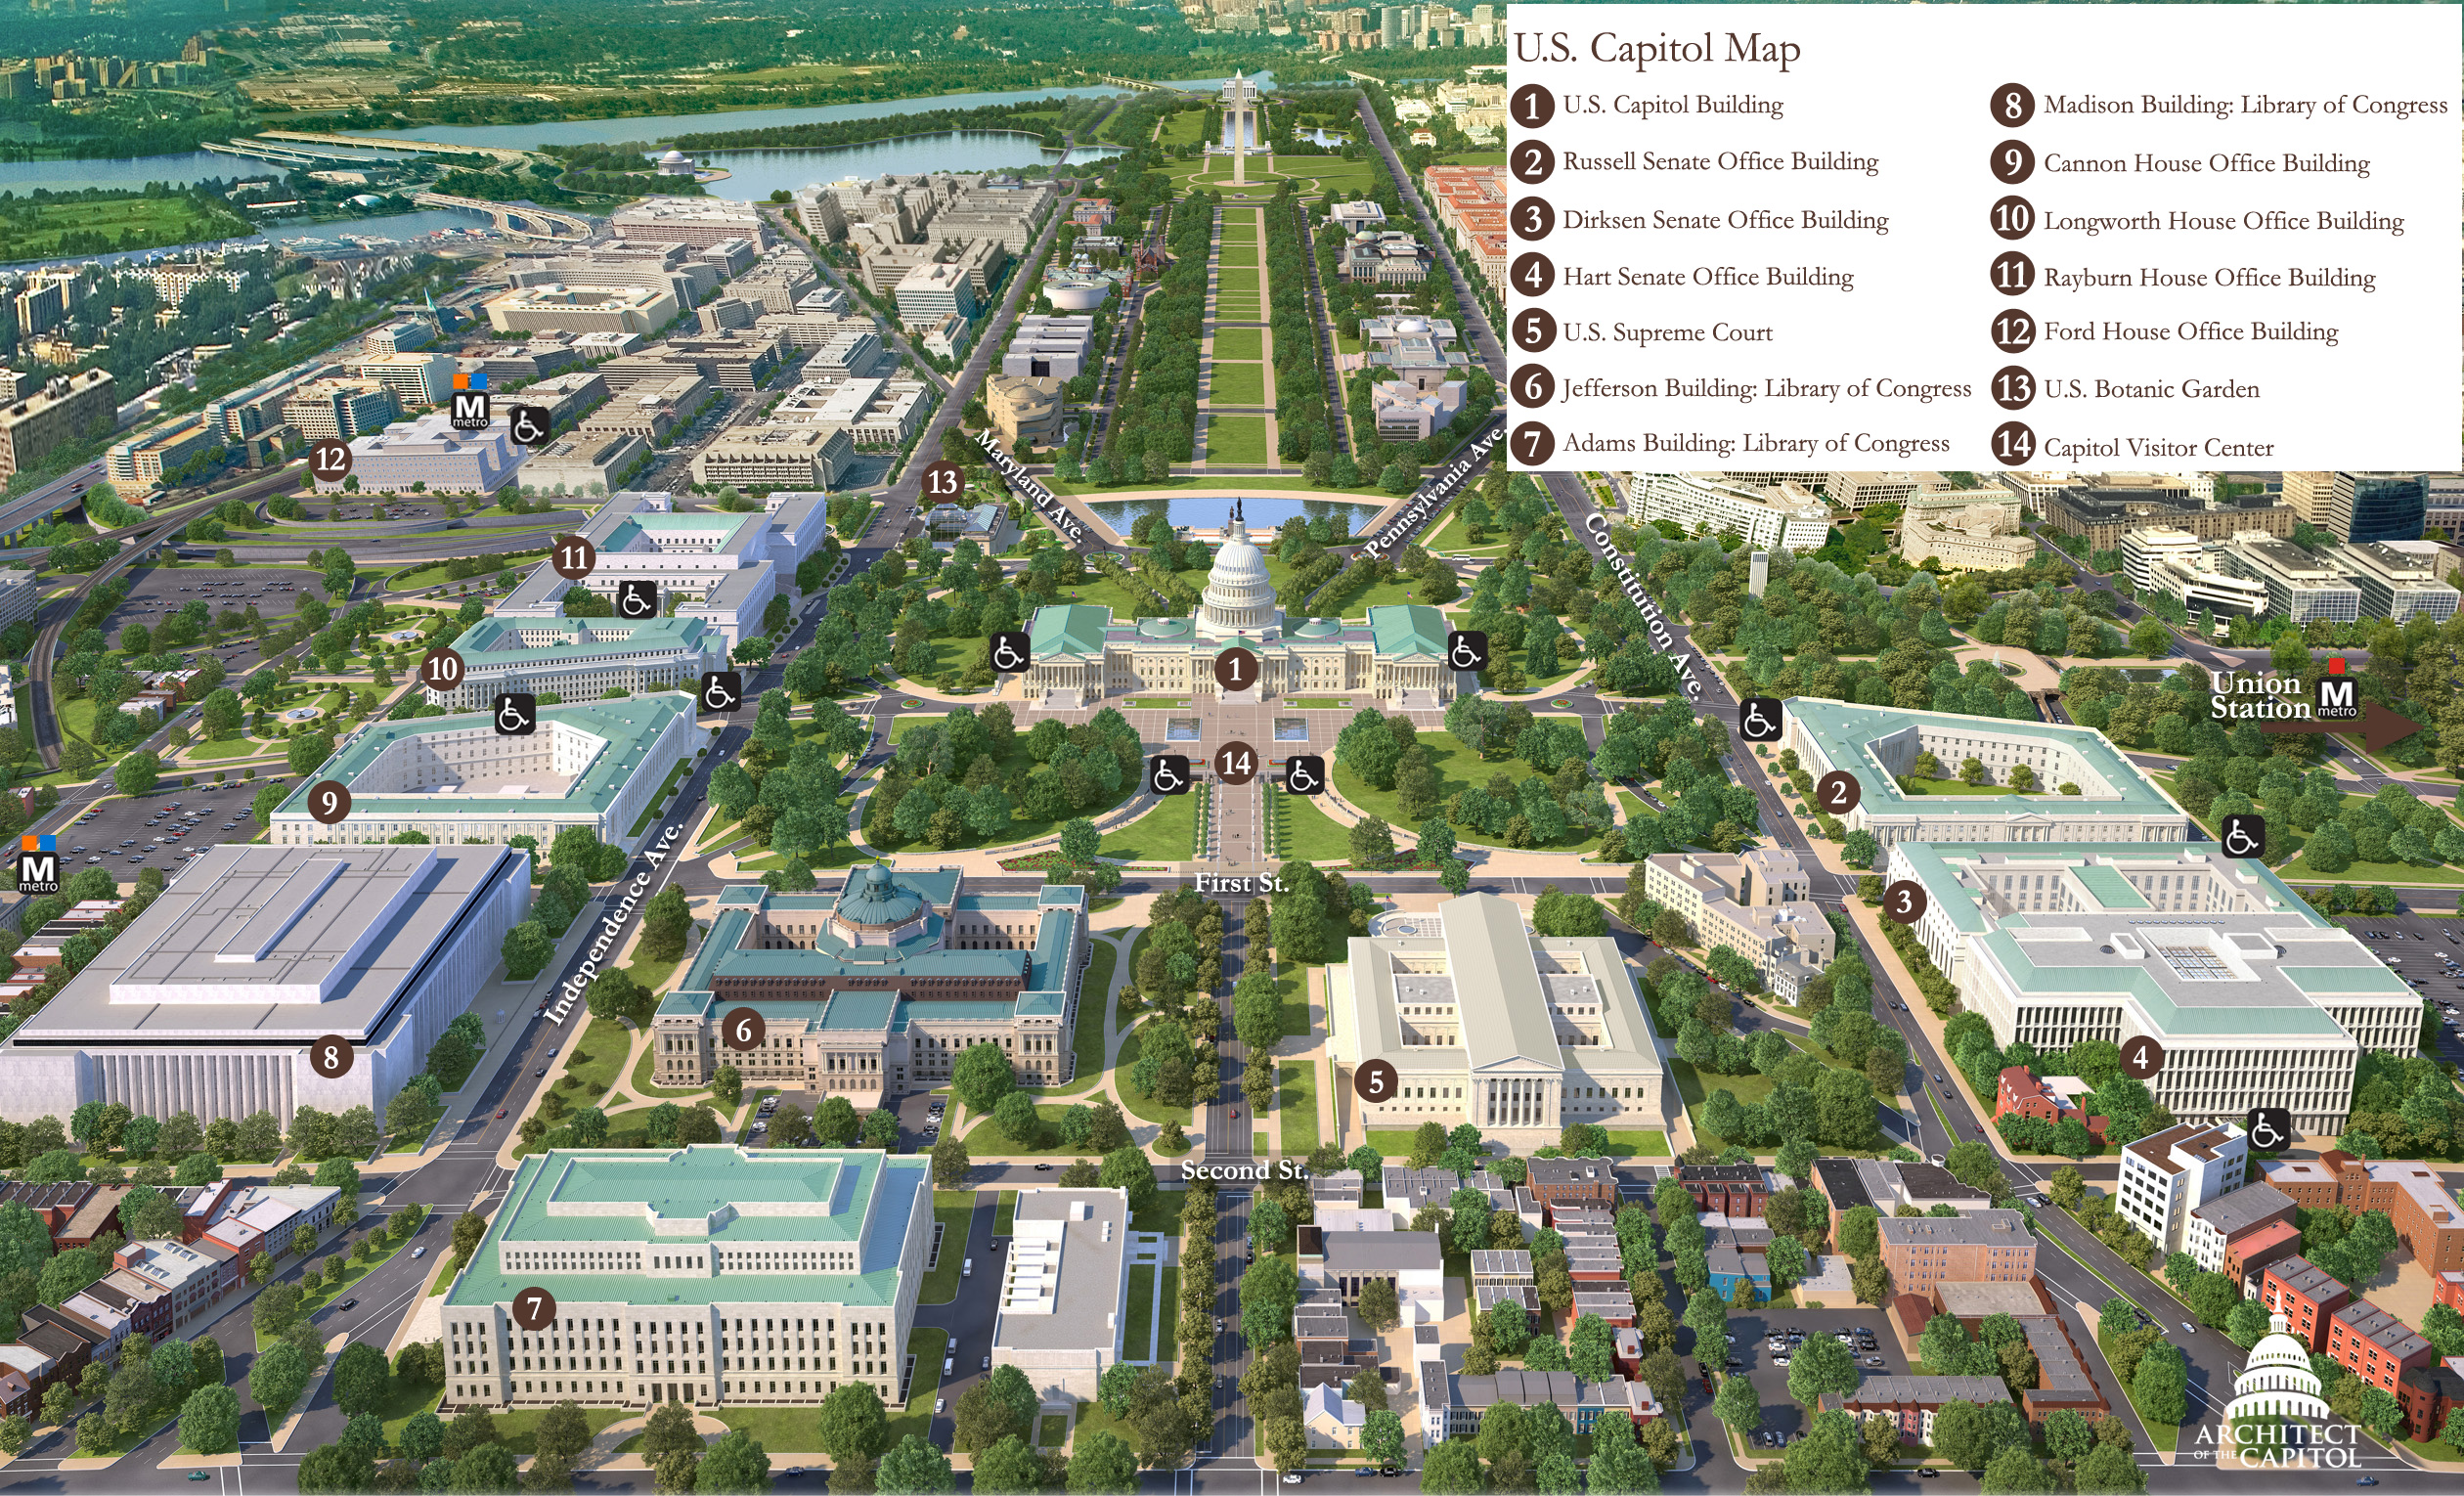 Capitol Hill Map